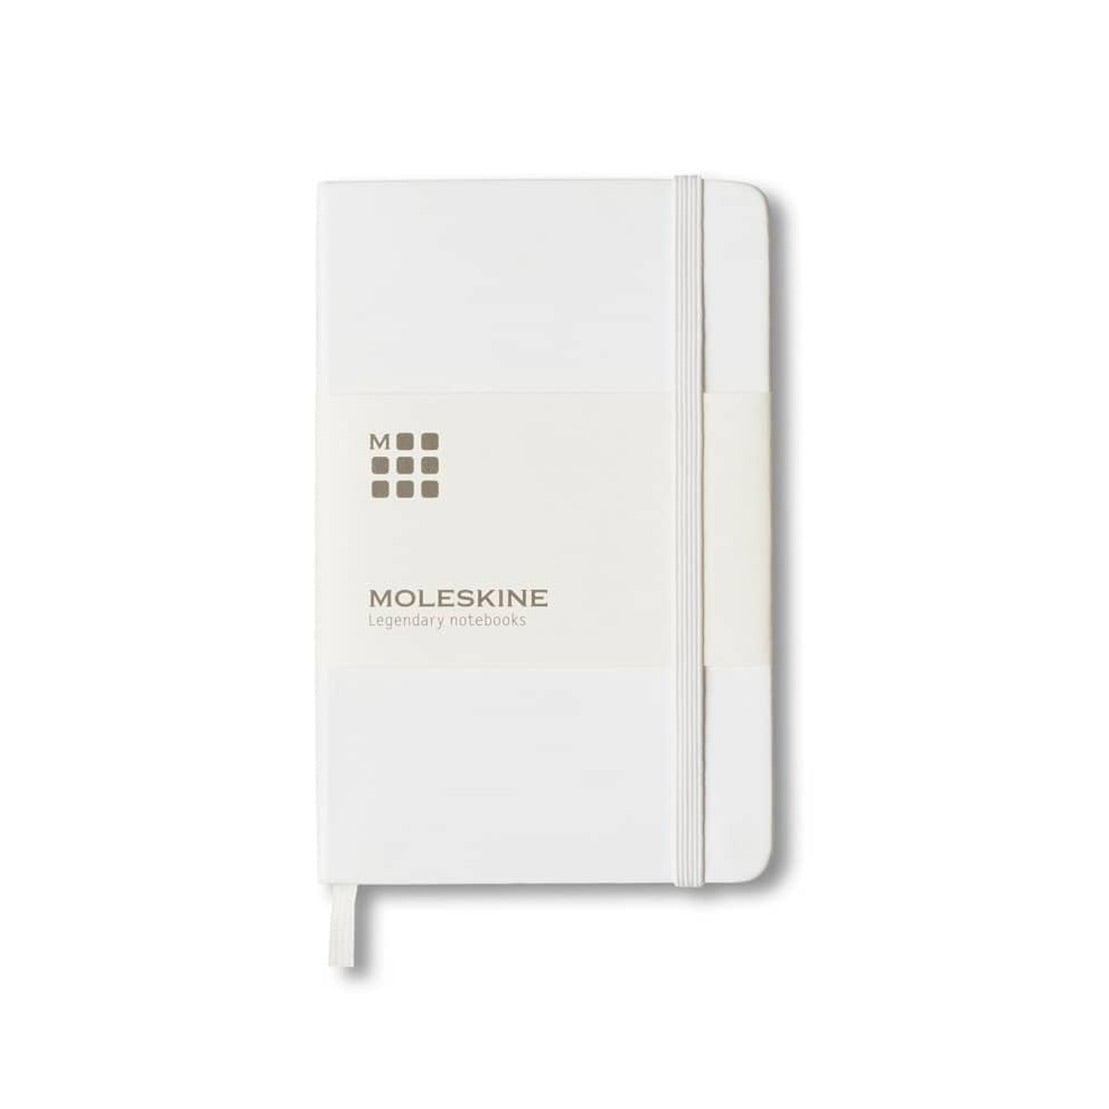 Moleskine Pocket Notebook Hard Cover Ruled White